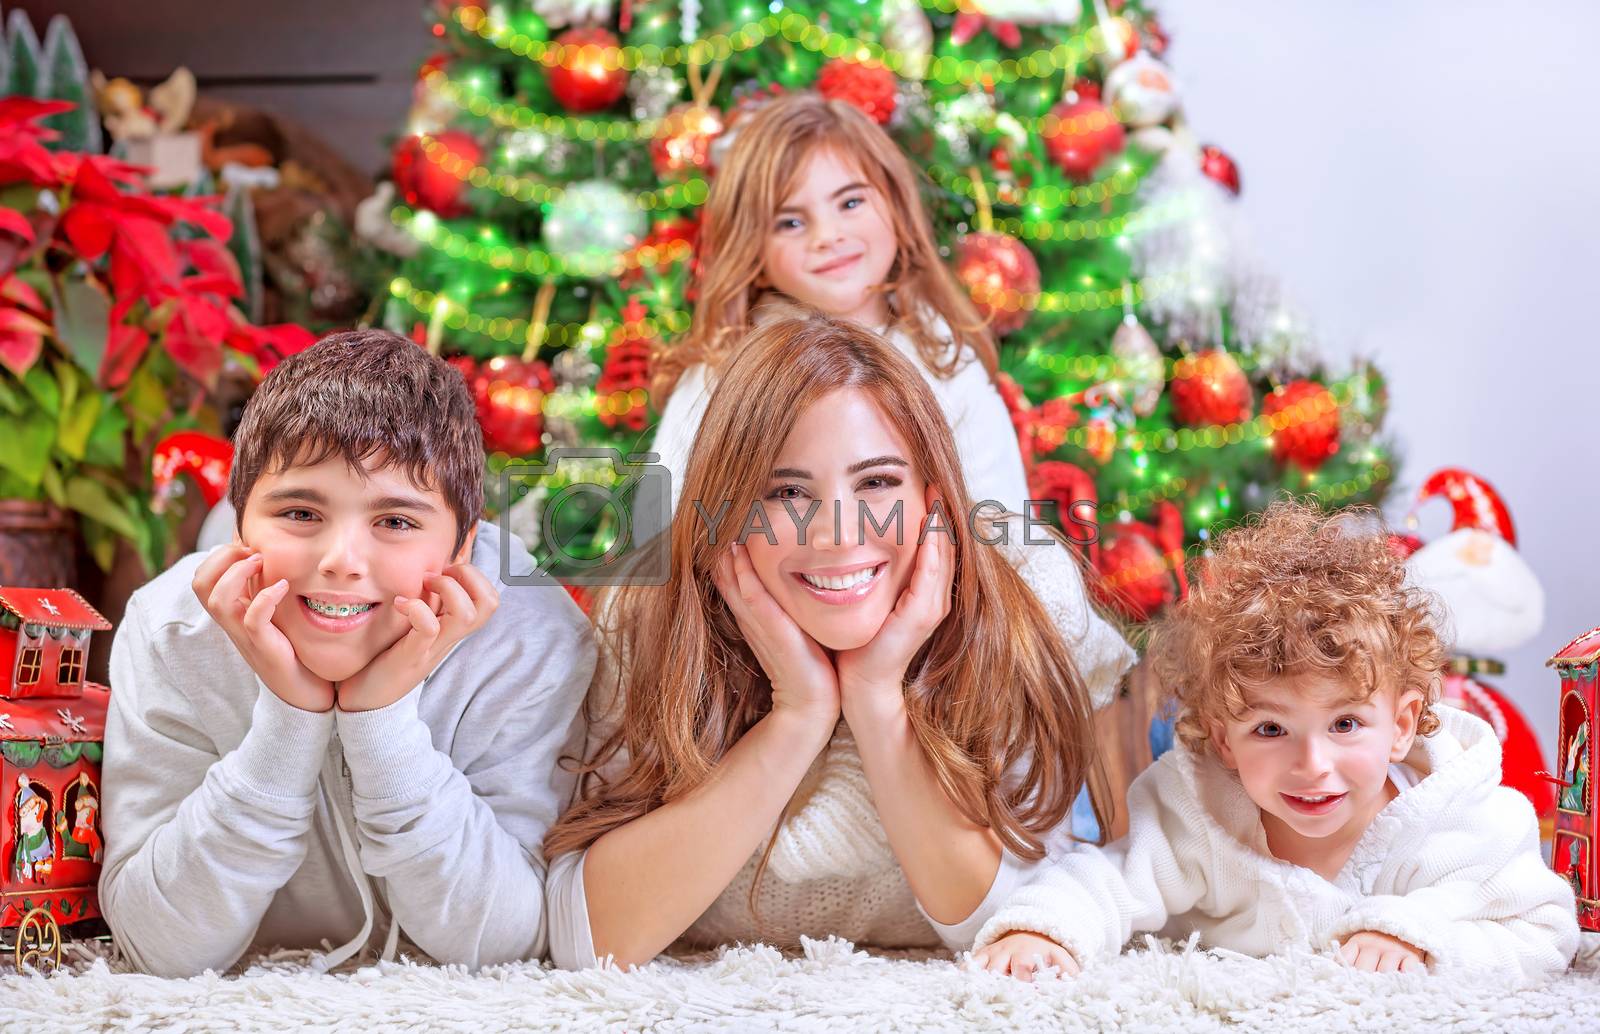 Royalty free image of Happy Christmas celebration by Anna_Omelchenko